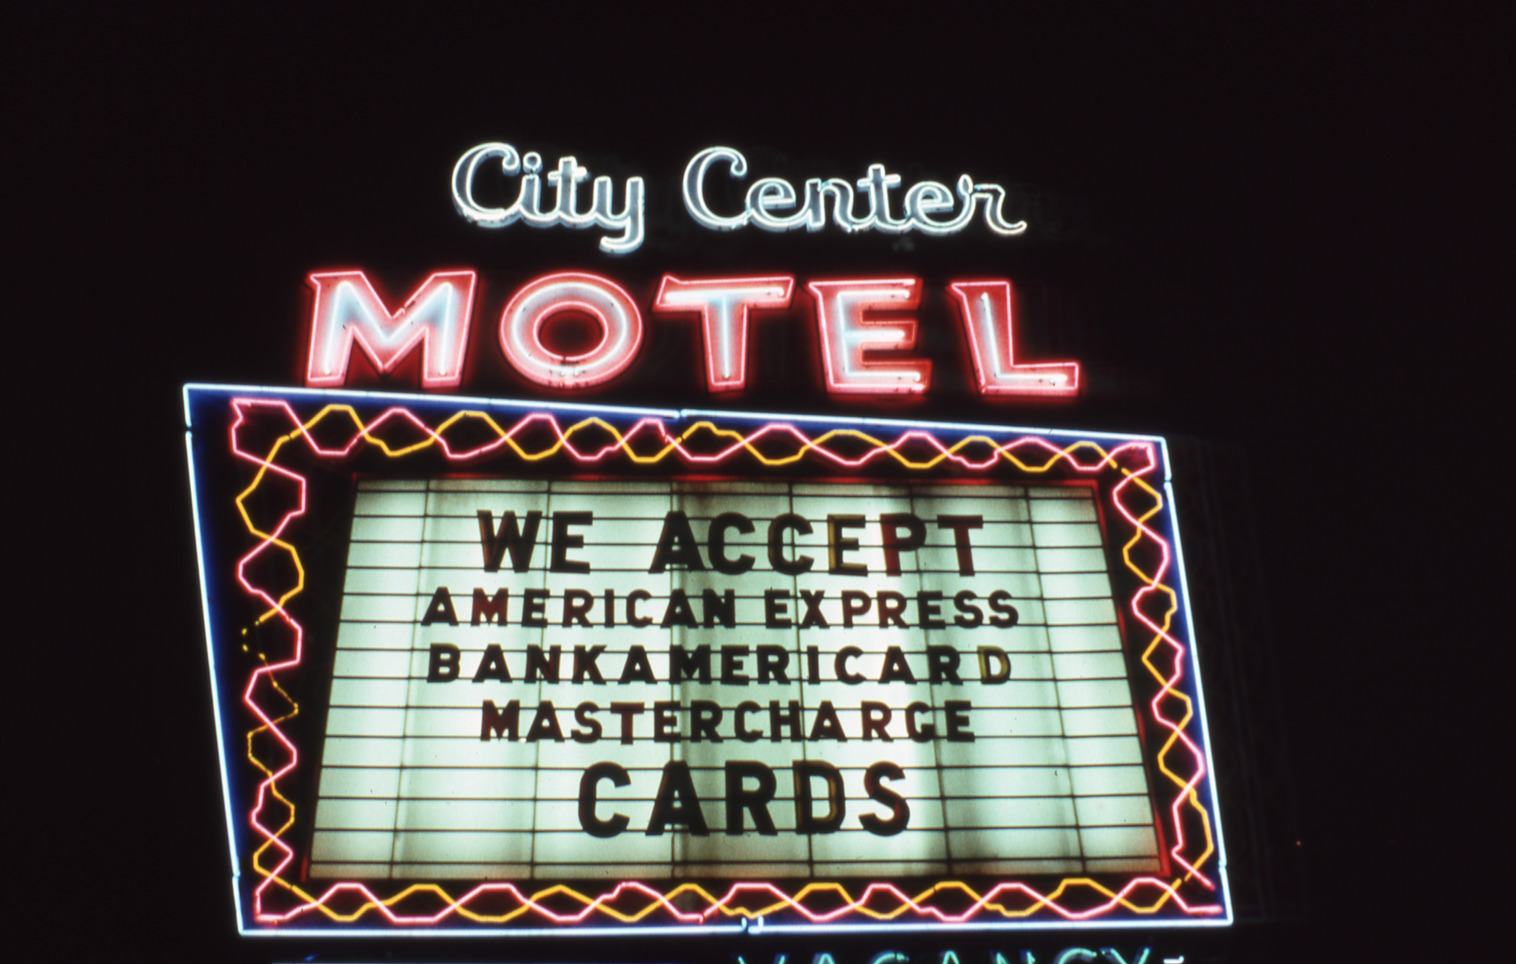 City Center Motel marquee sign, LAs Vegas, Nevada: photographic print